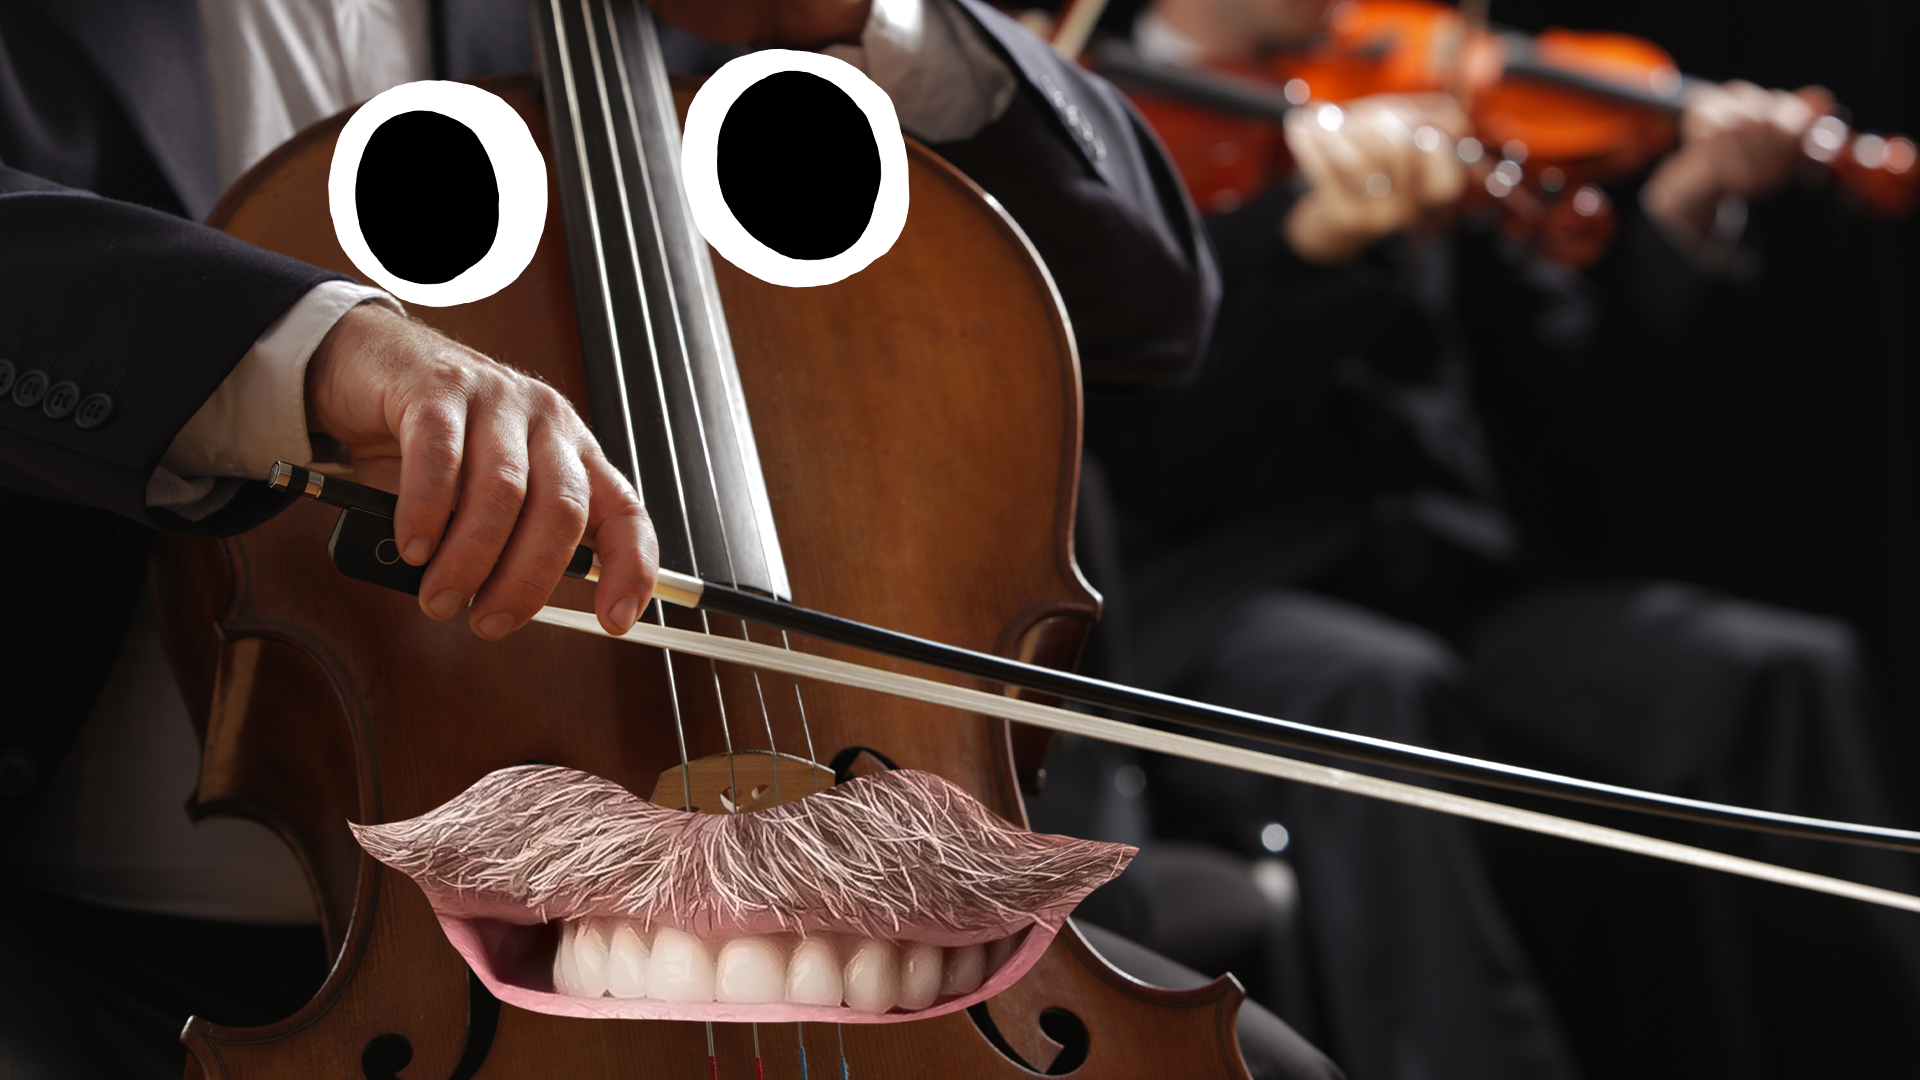 A large cello with a moustache